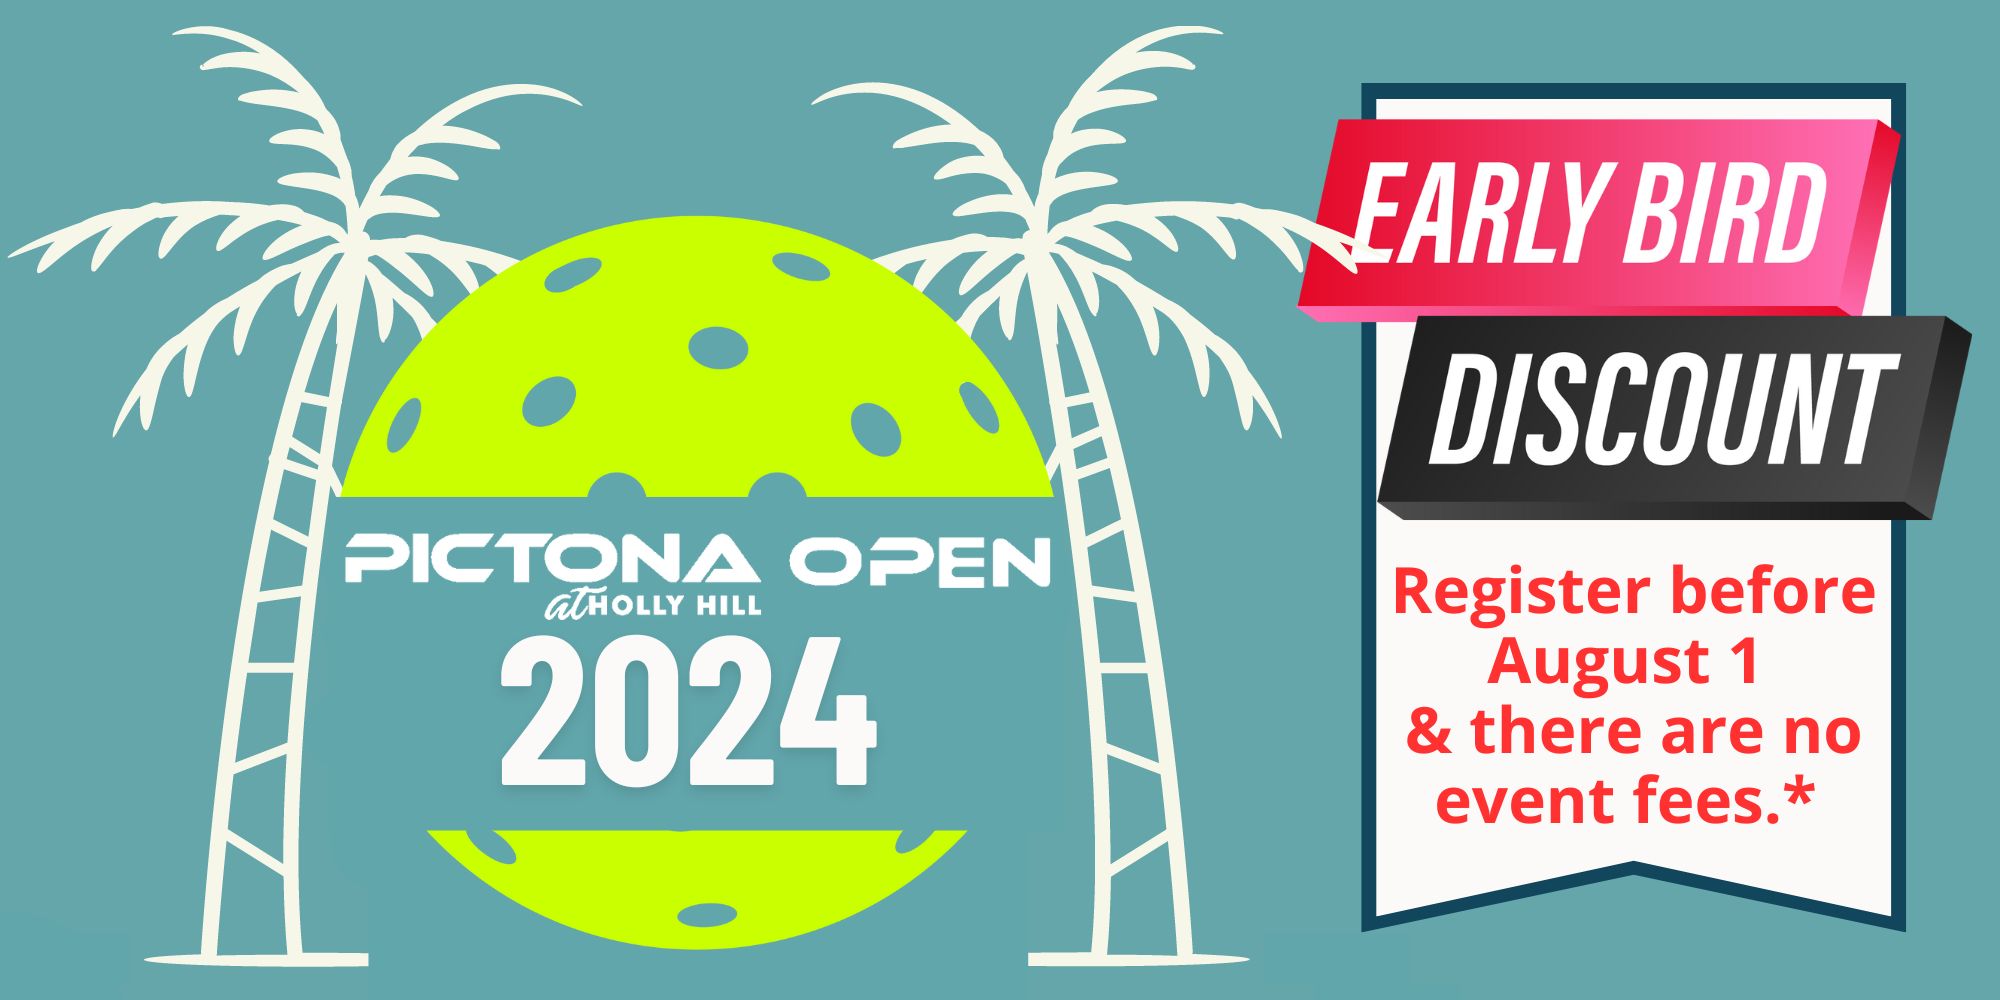 Pictona Open 2024 - No Sponsor